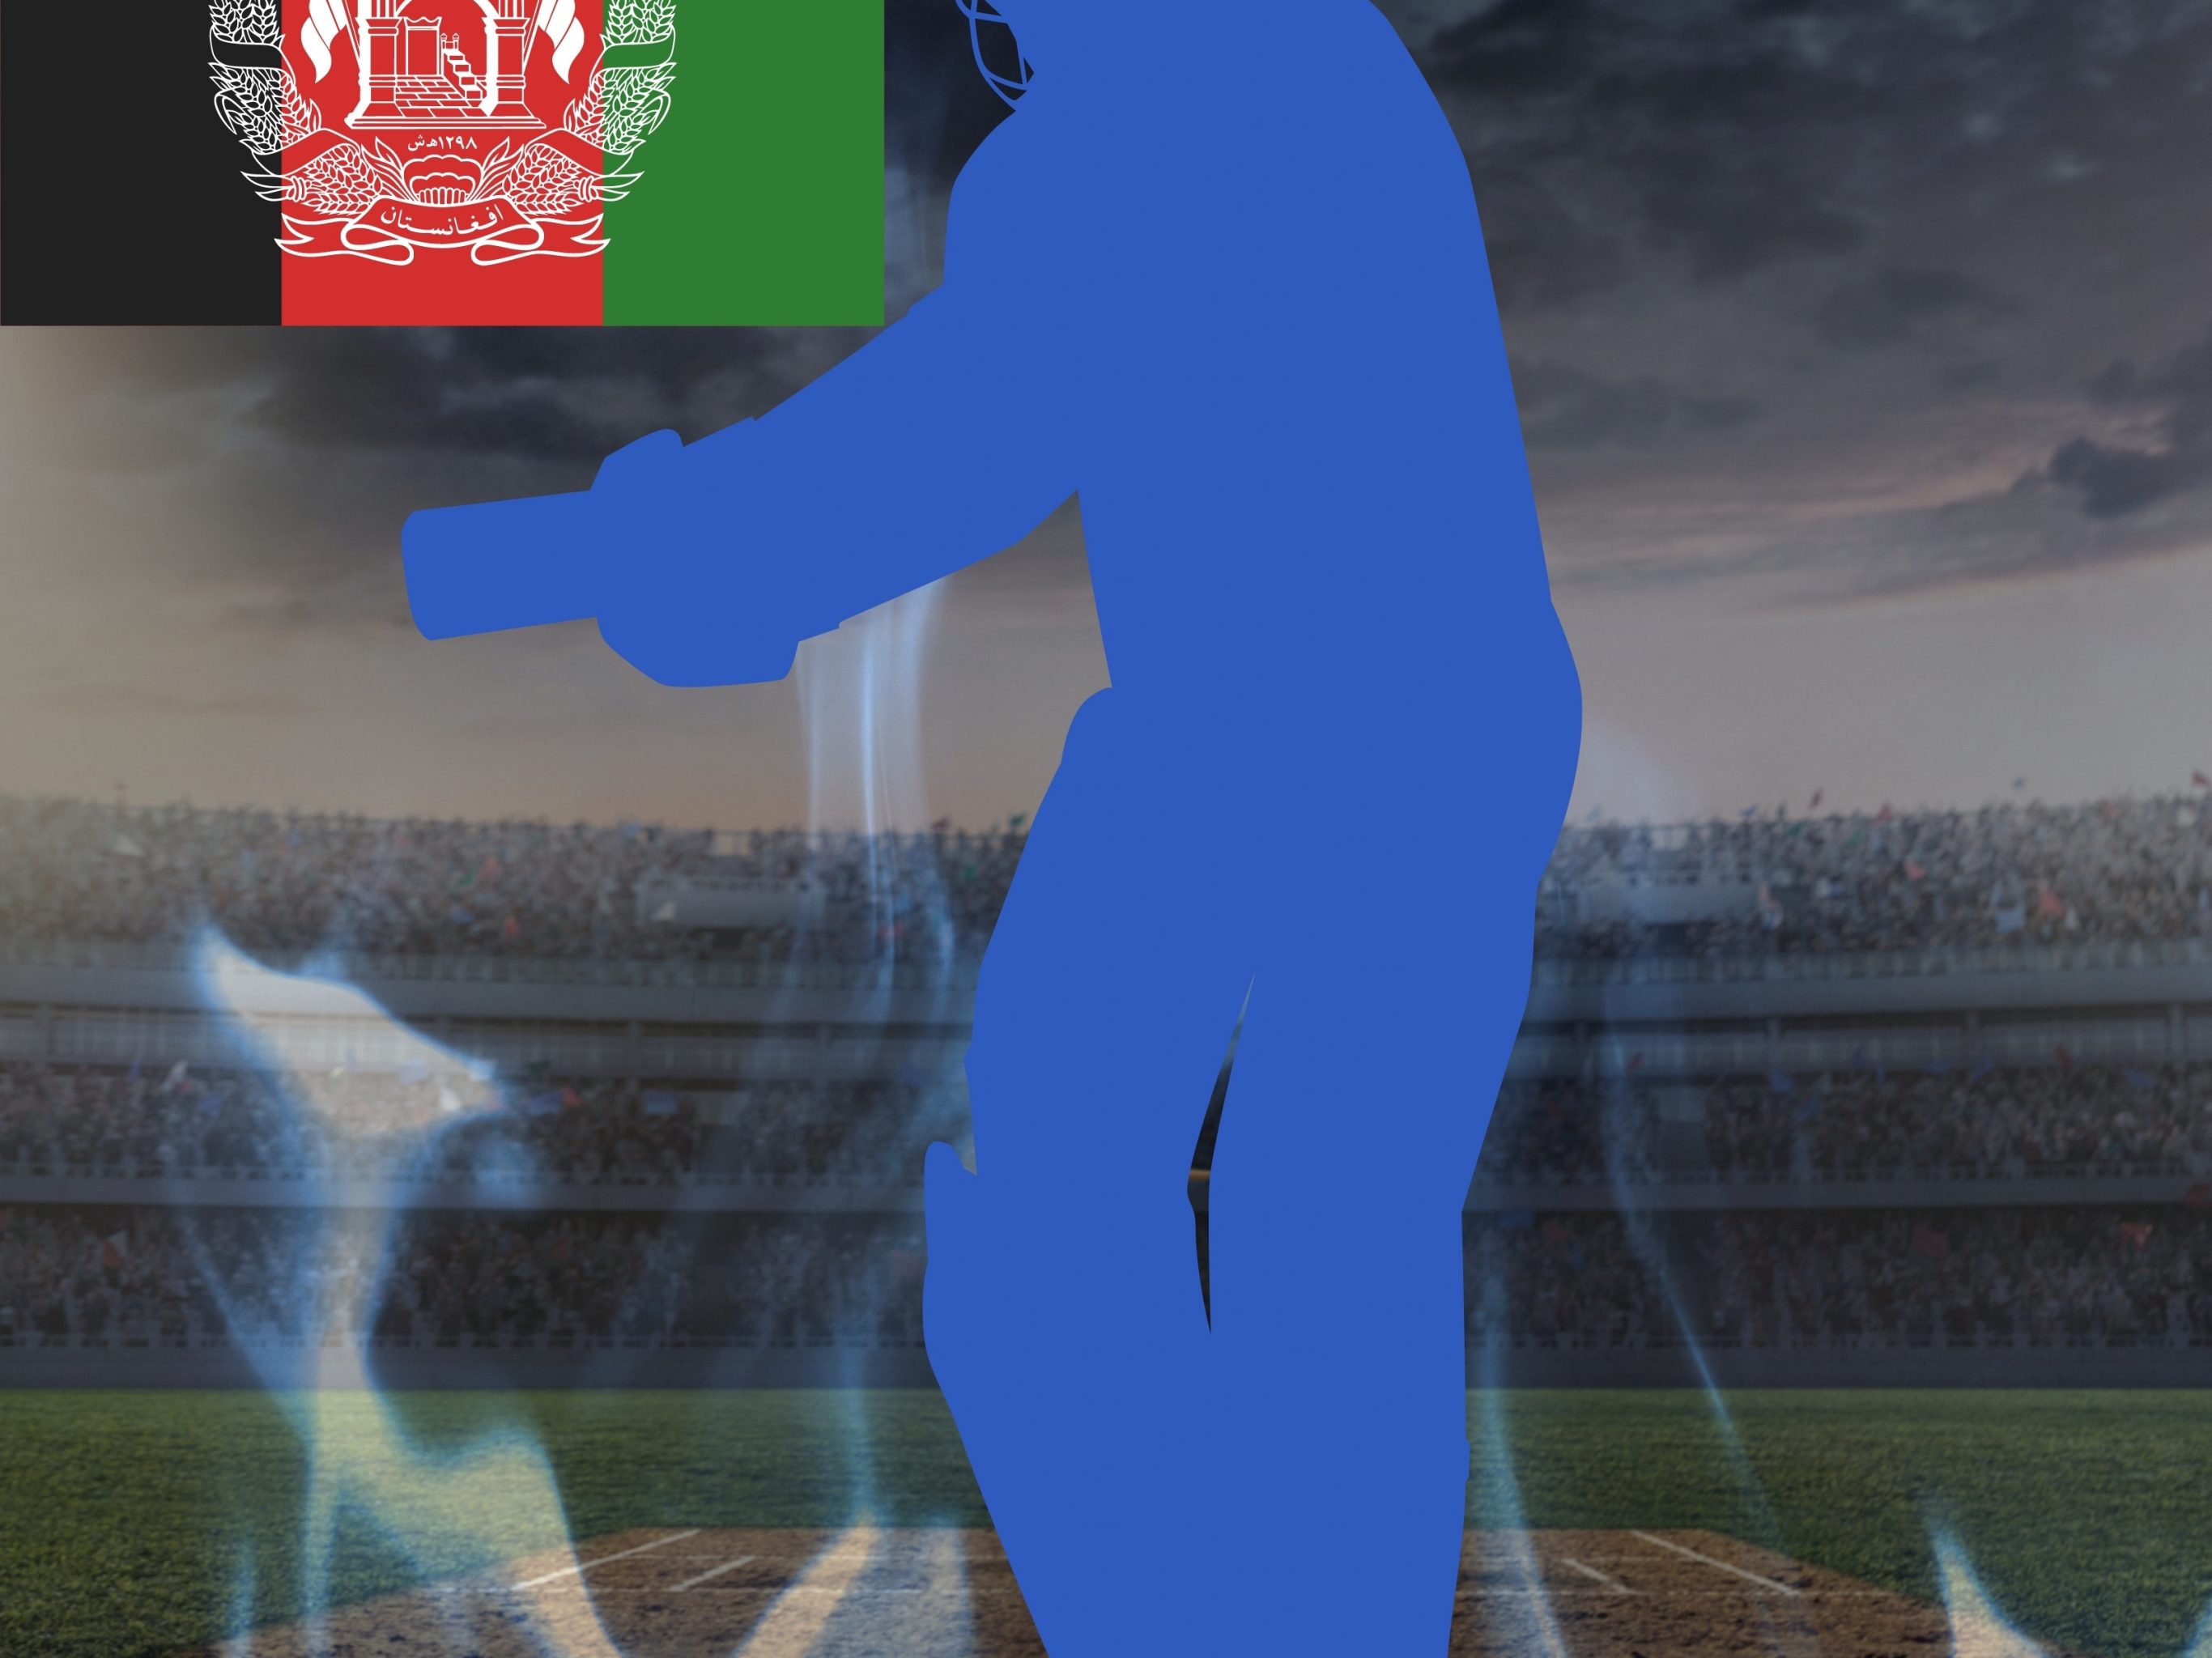 2732x2048 iPad air iPad Pro wallpapers Afhganistan Cricket Stadium iPad Wallpaper 2732x2048 pixels resolution